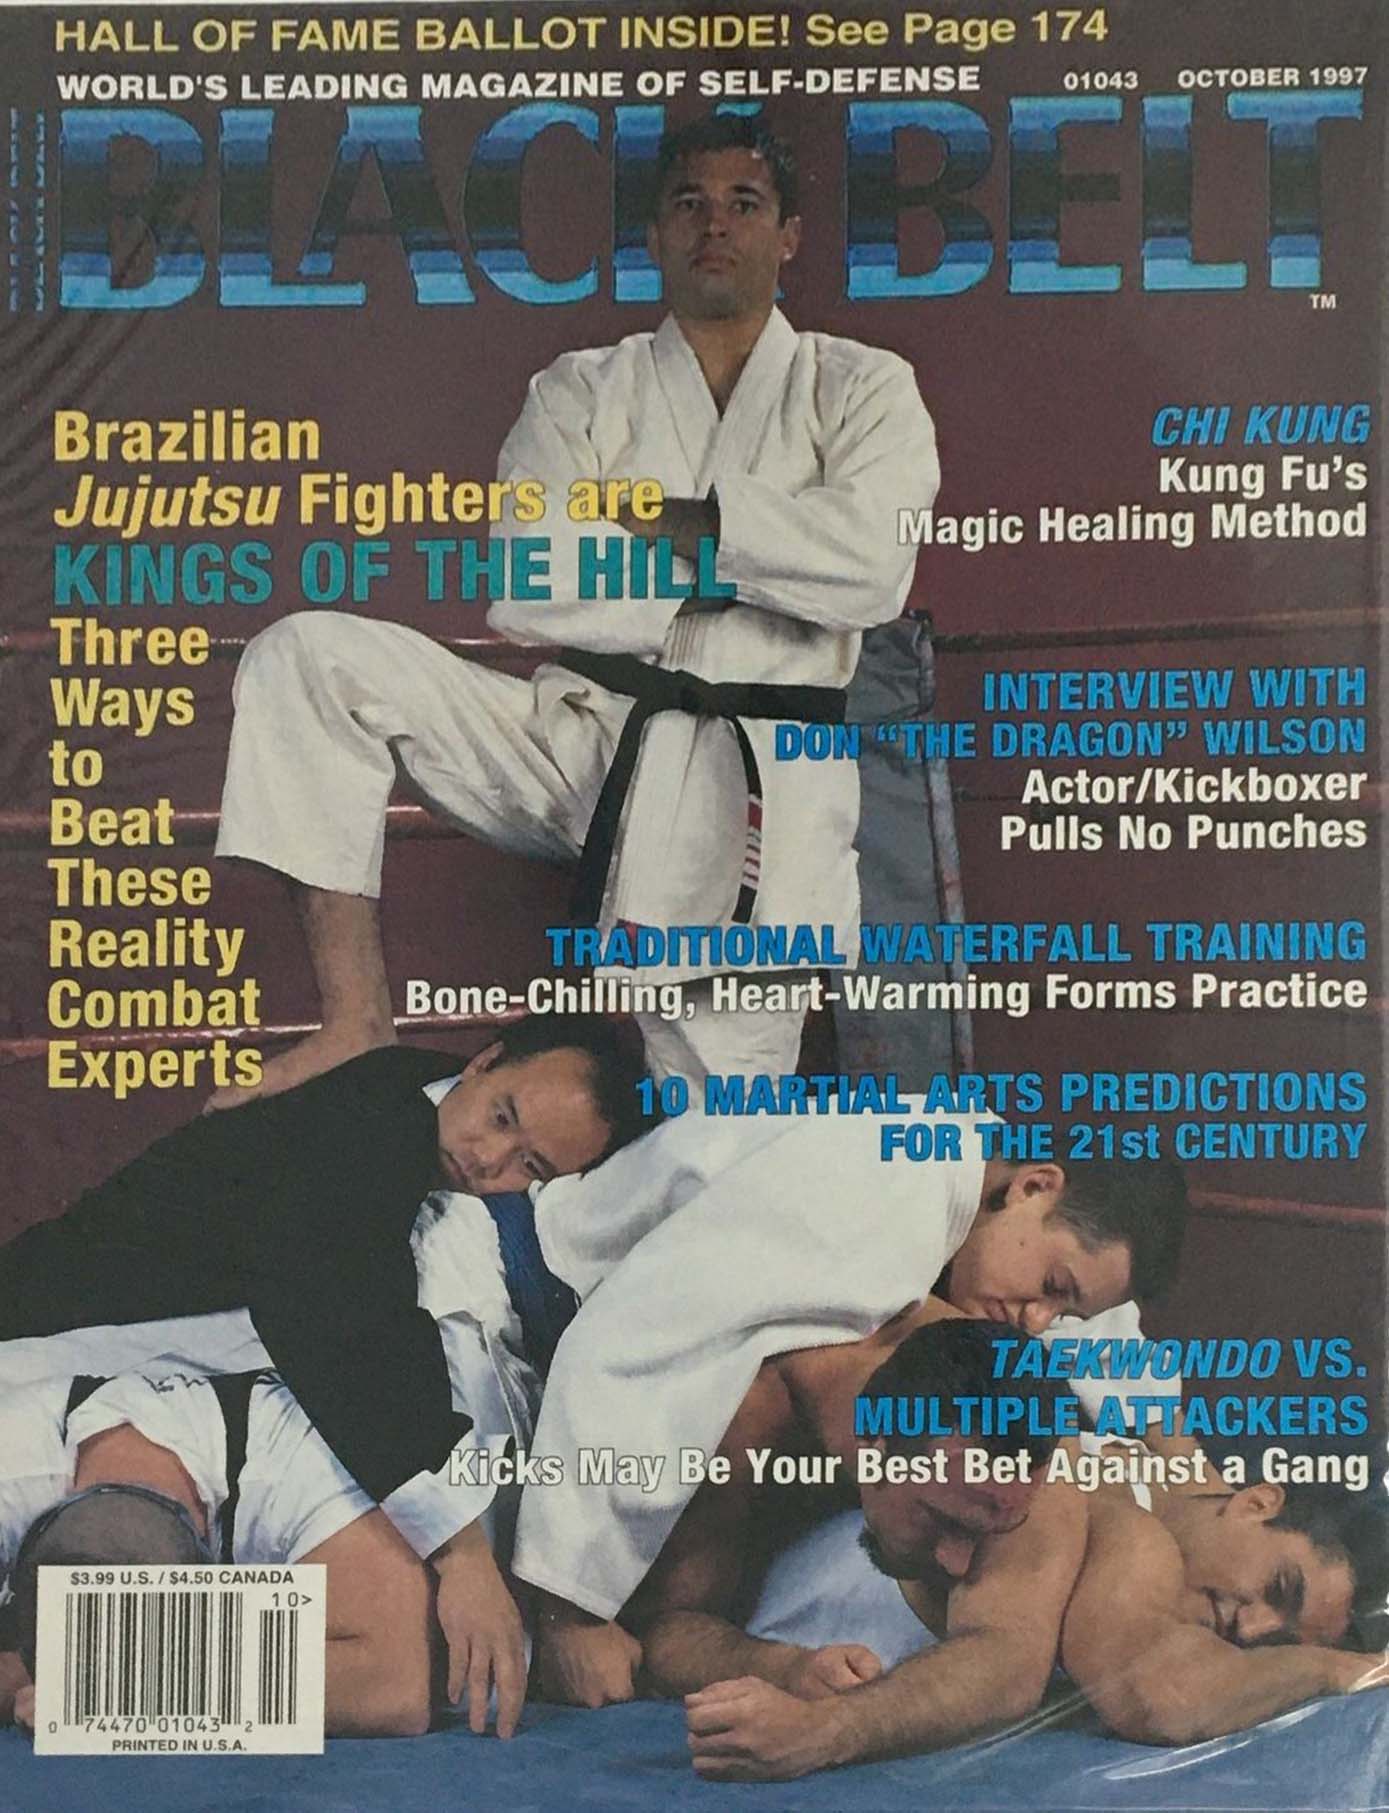 Black Belt October 1997, , Chi Kung Kung Fu's Magic Healing Method